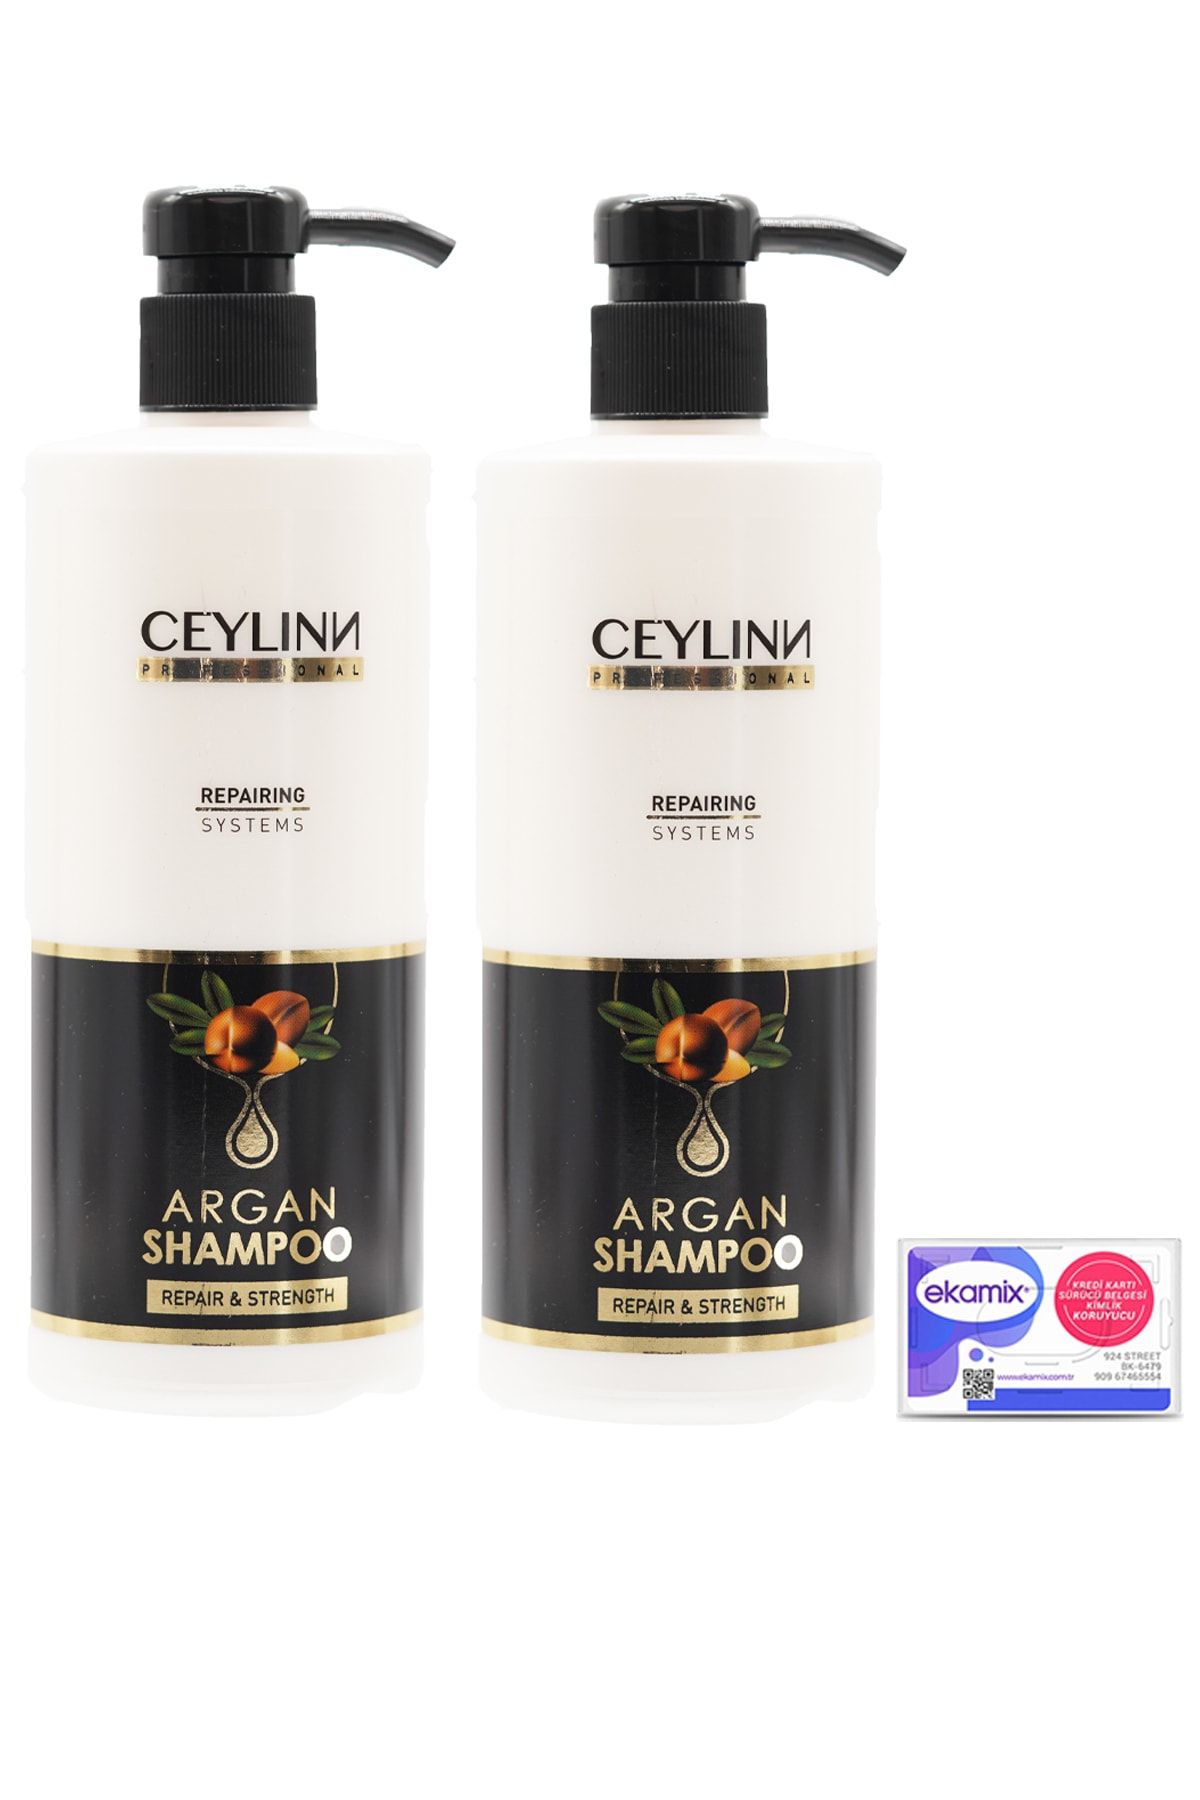 Ceylinn Argan Shampoo 2 Adet 500ml